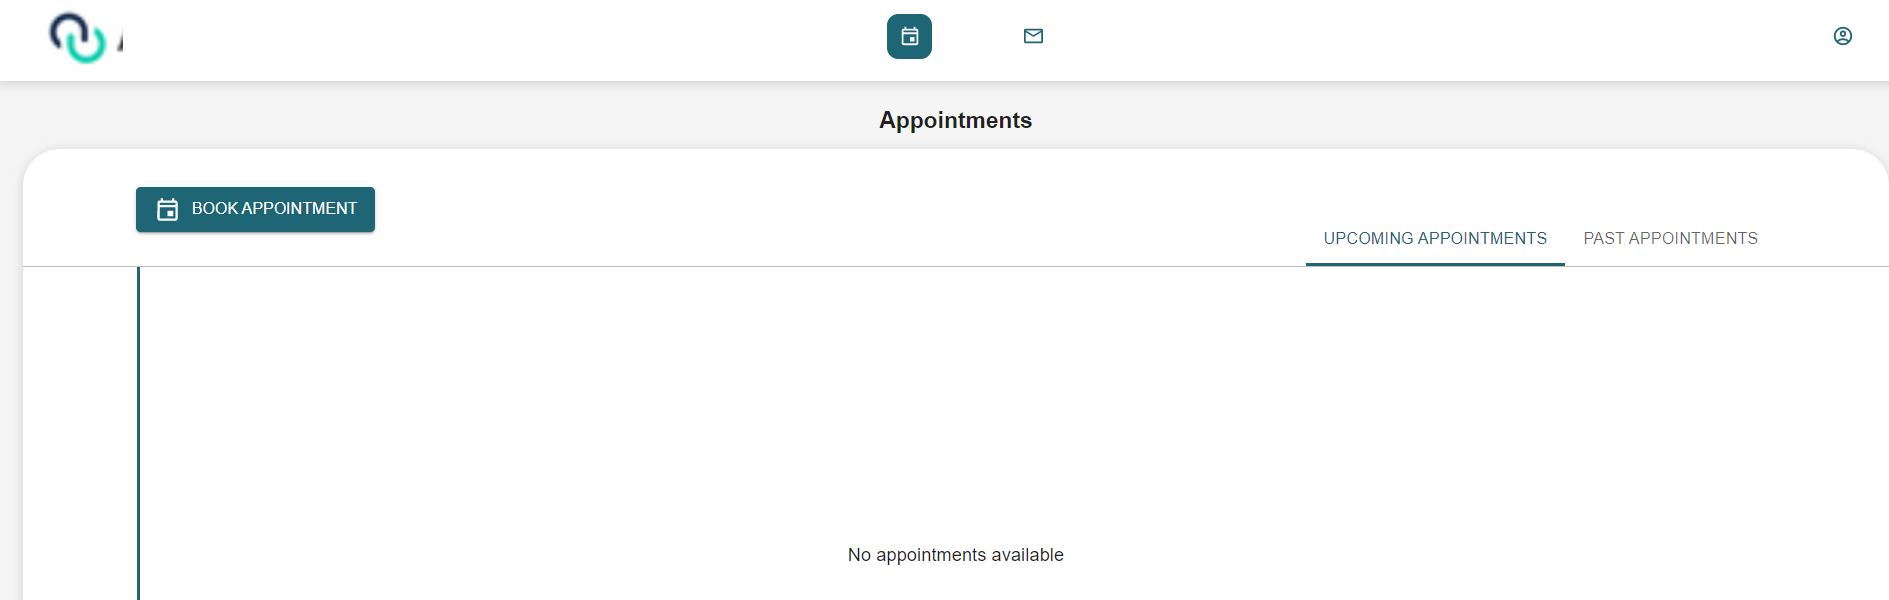 appointments_patient_portal.JPG